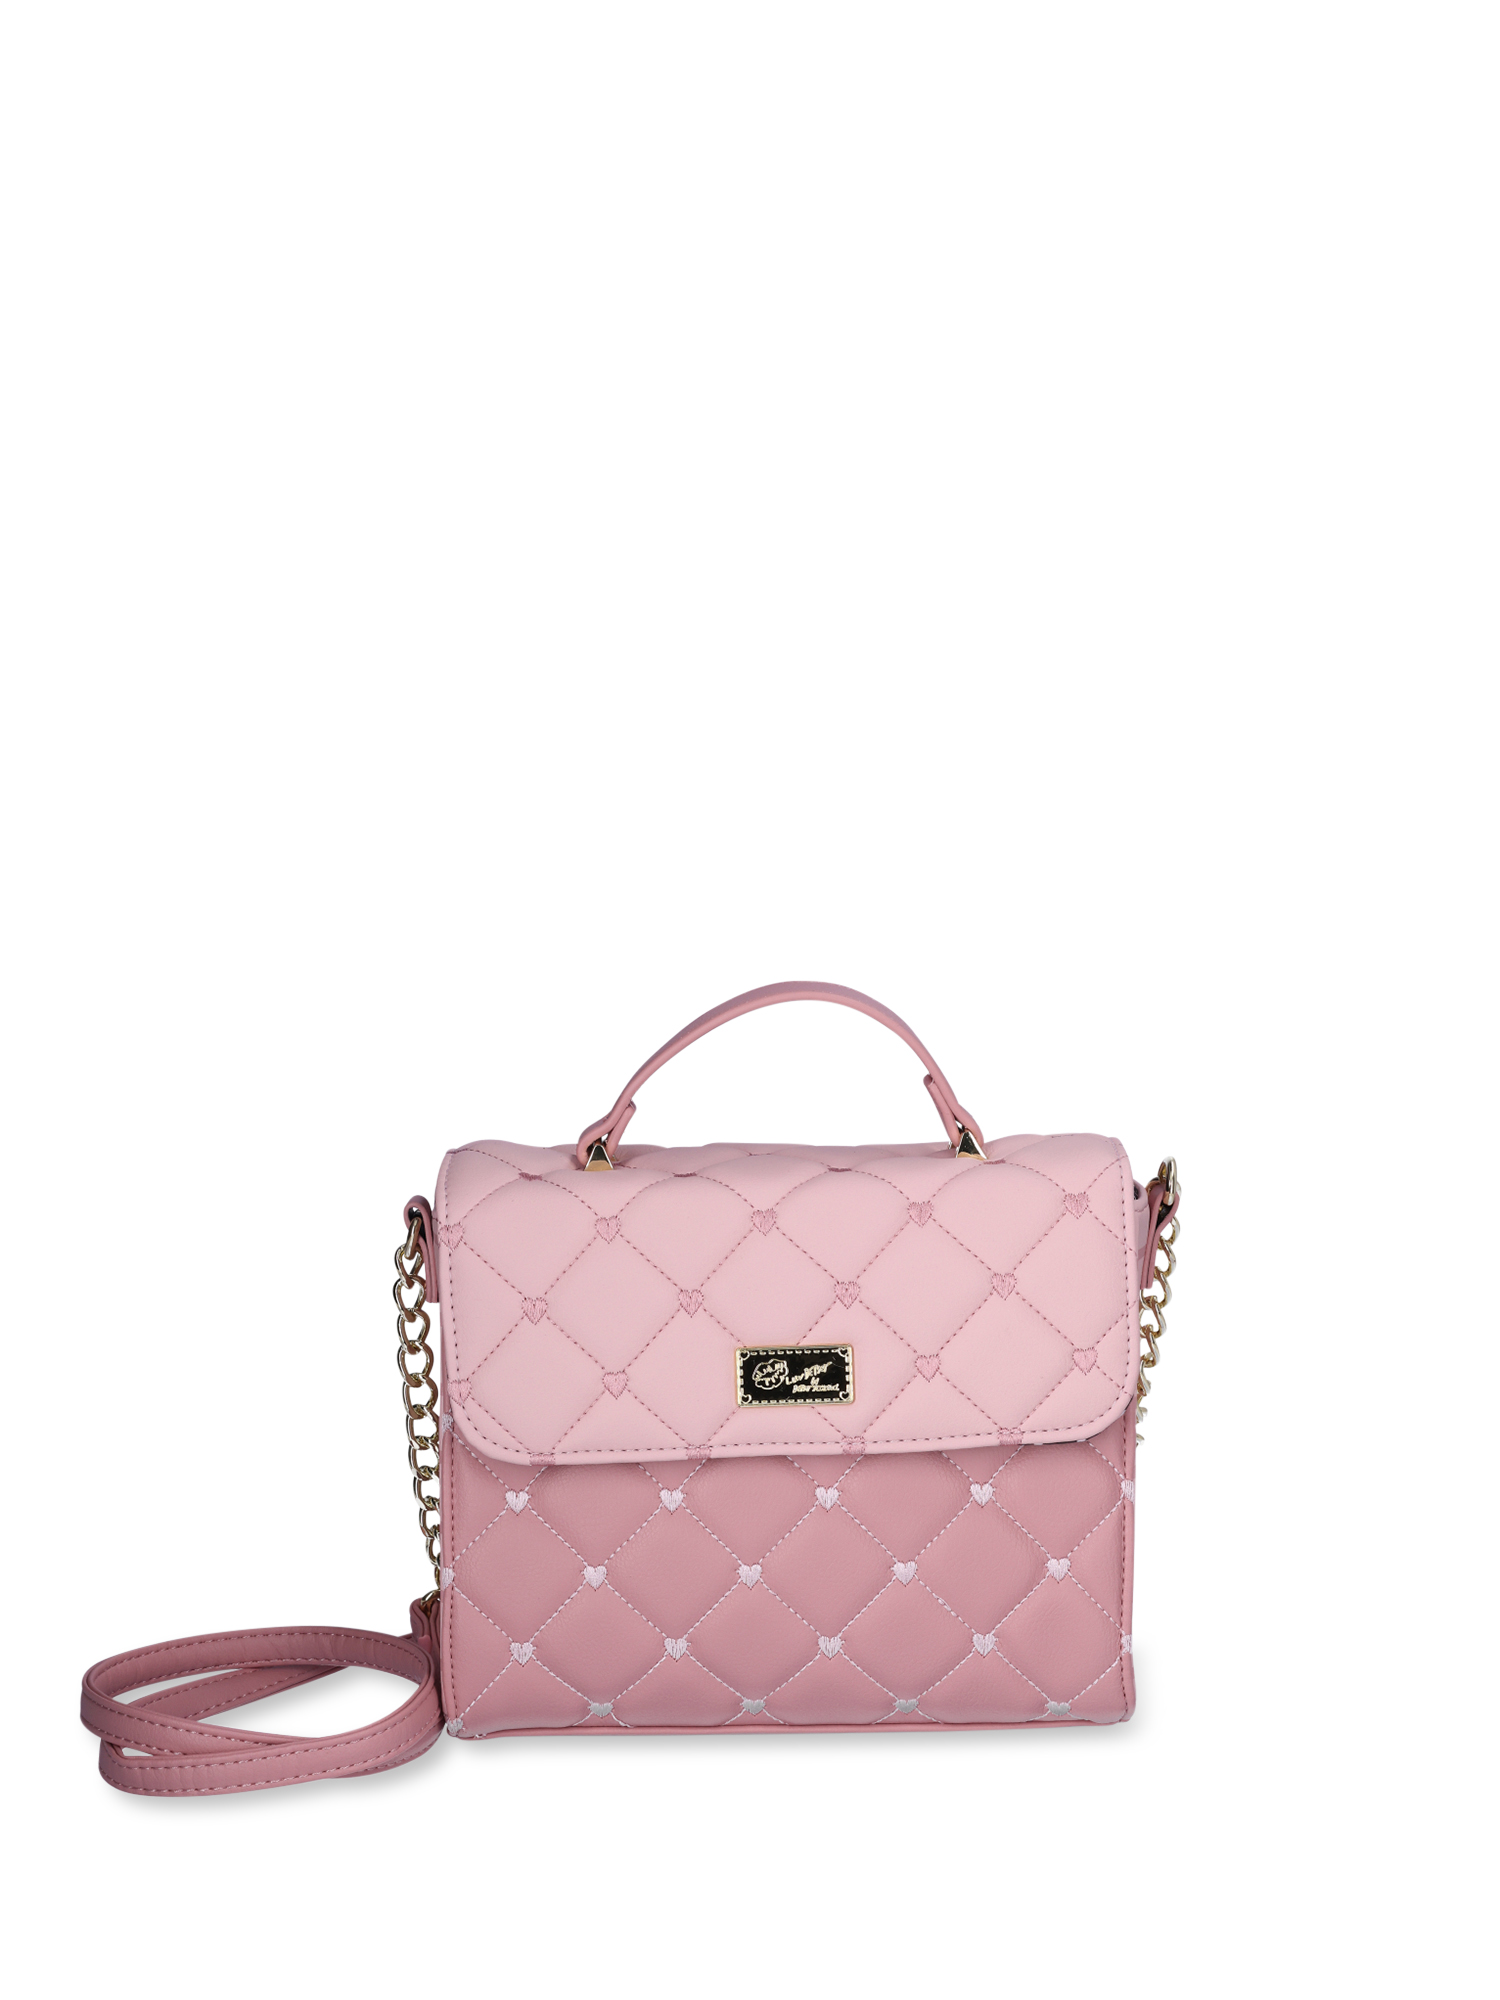 Betsey Johnson | Bags | Betsey Johnson Light Pink Tote Style Purse |  Poshmark